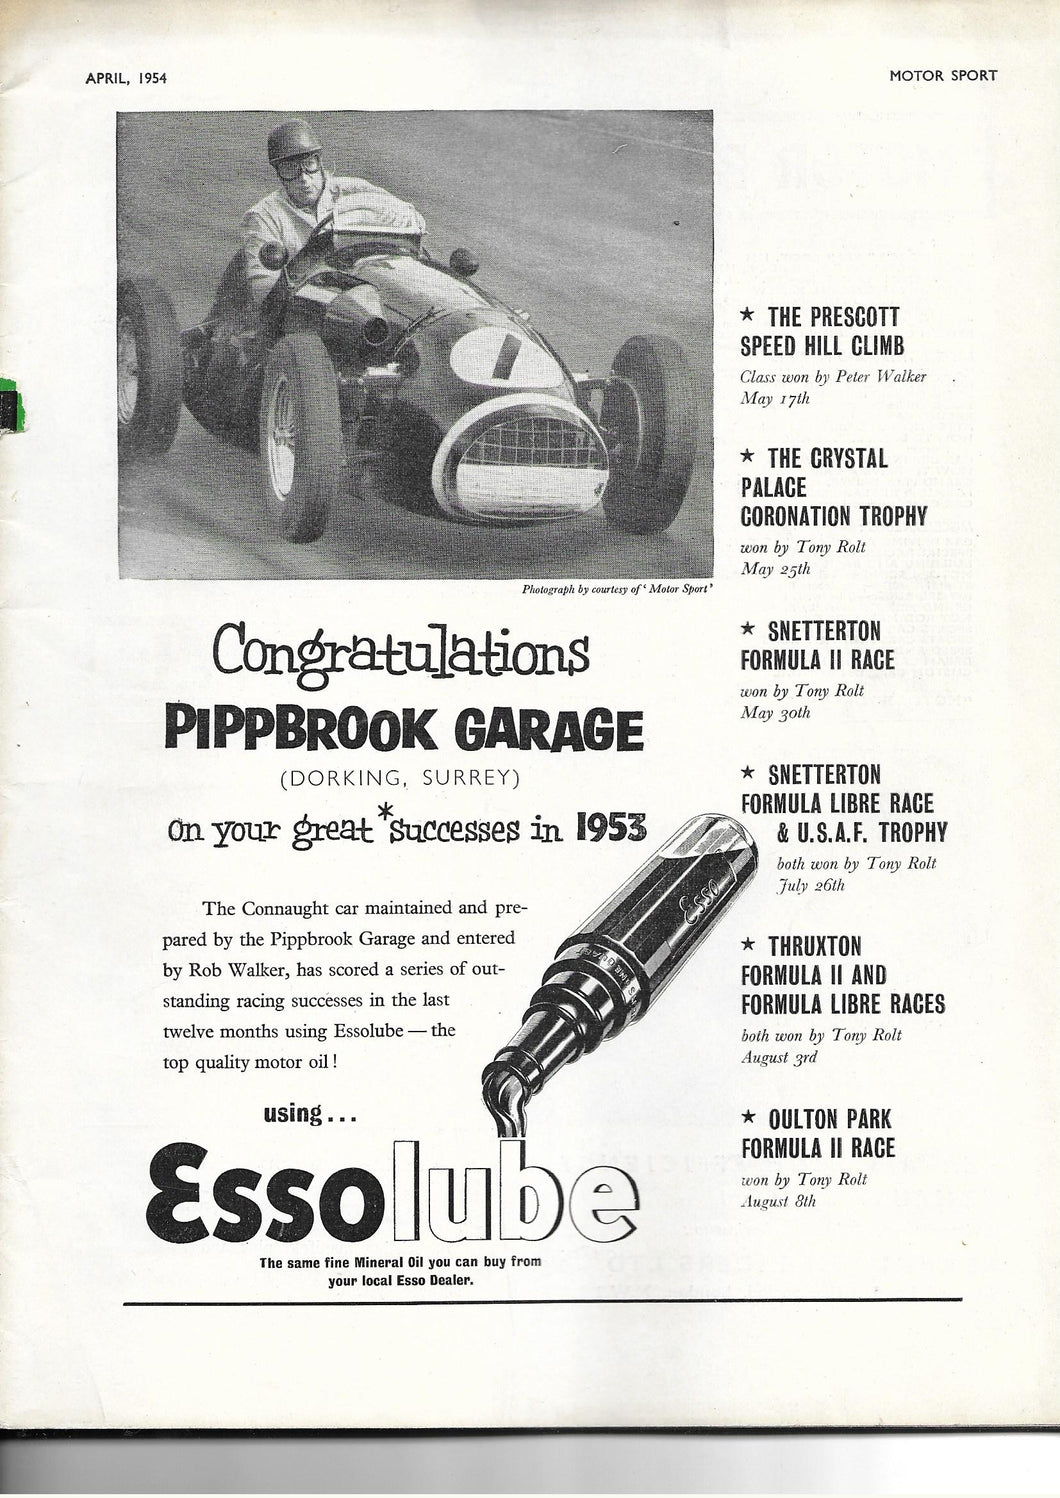 Motor Sport Magazine Vol XXX No 4 Racing In New Zealand and U.S.A April 1954